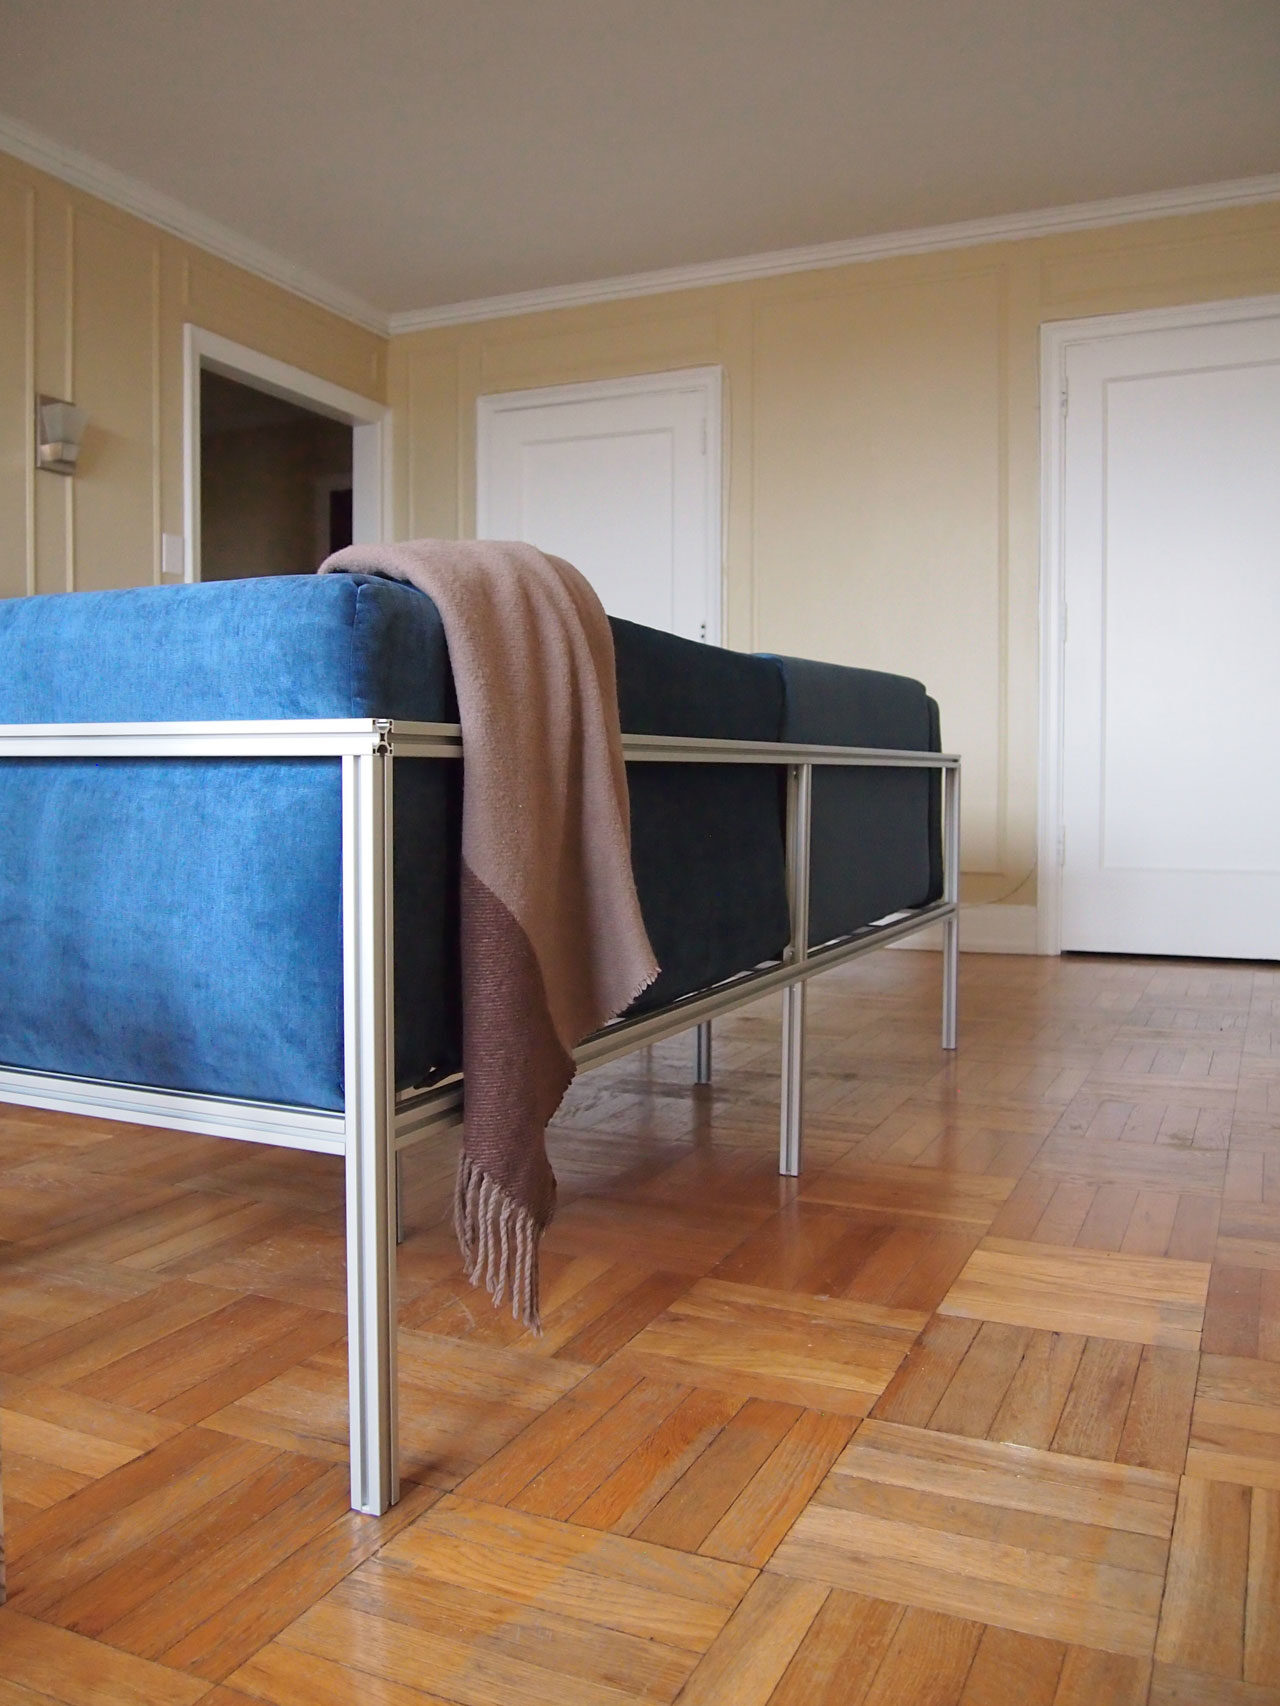 DIY velvet sofa couch designed by Aandersson